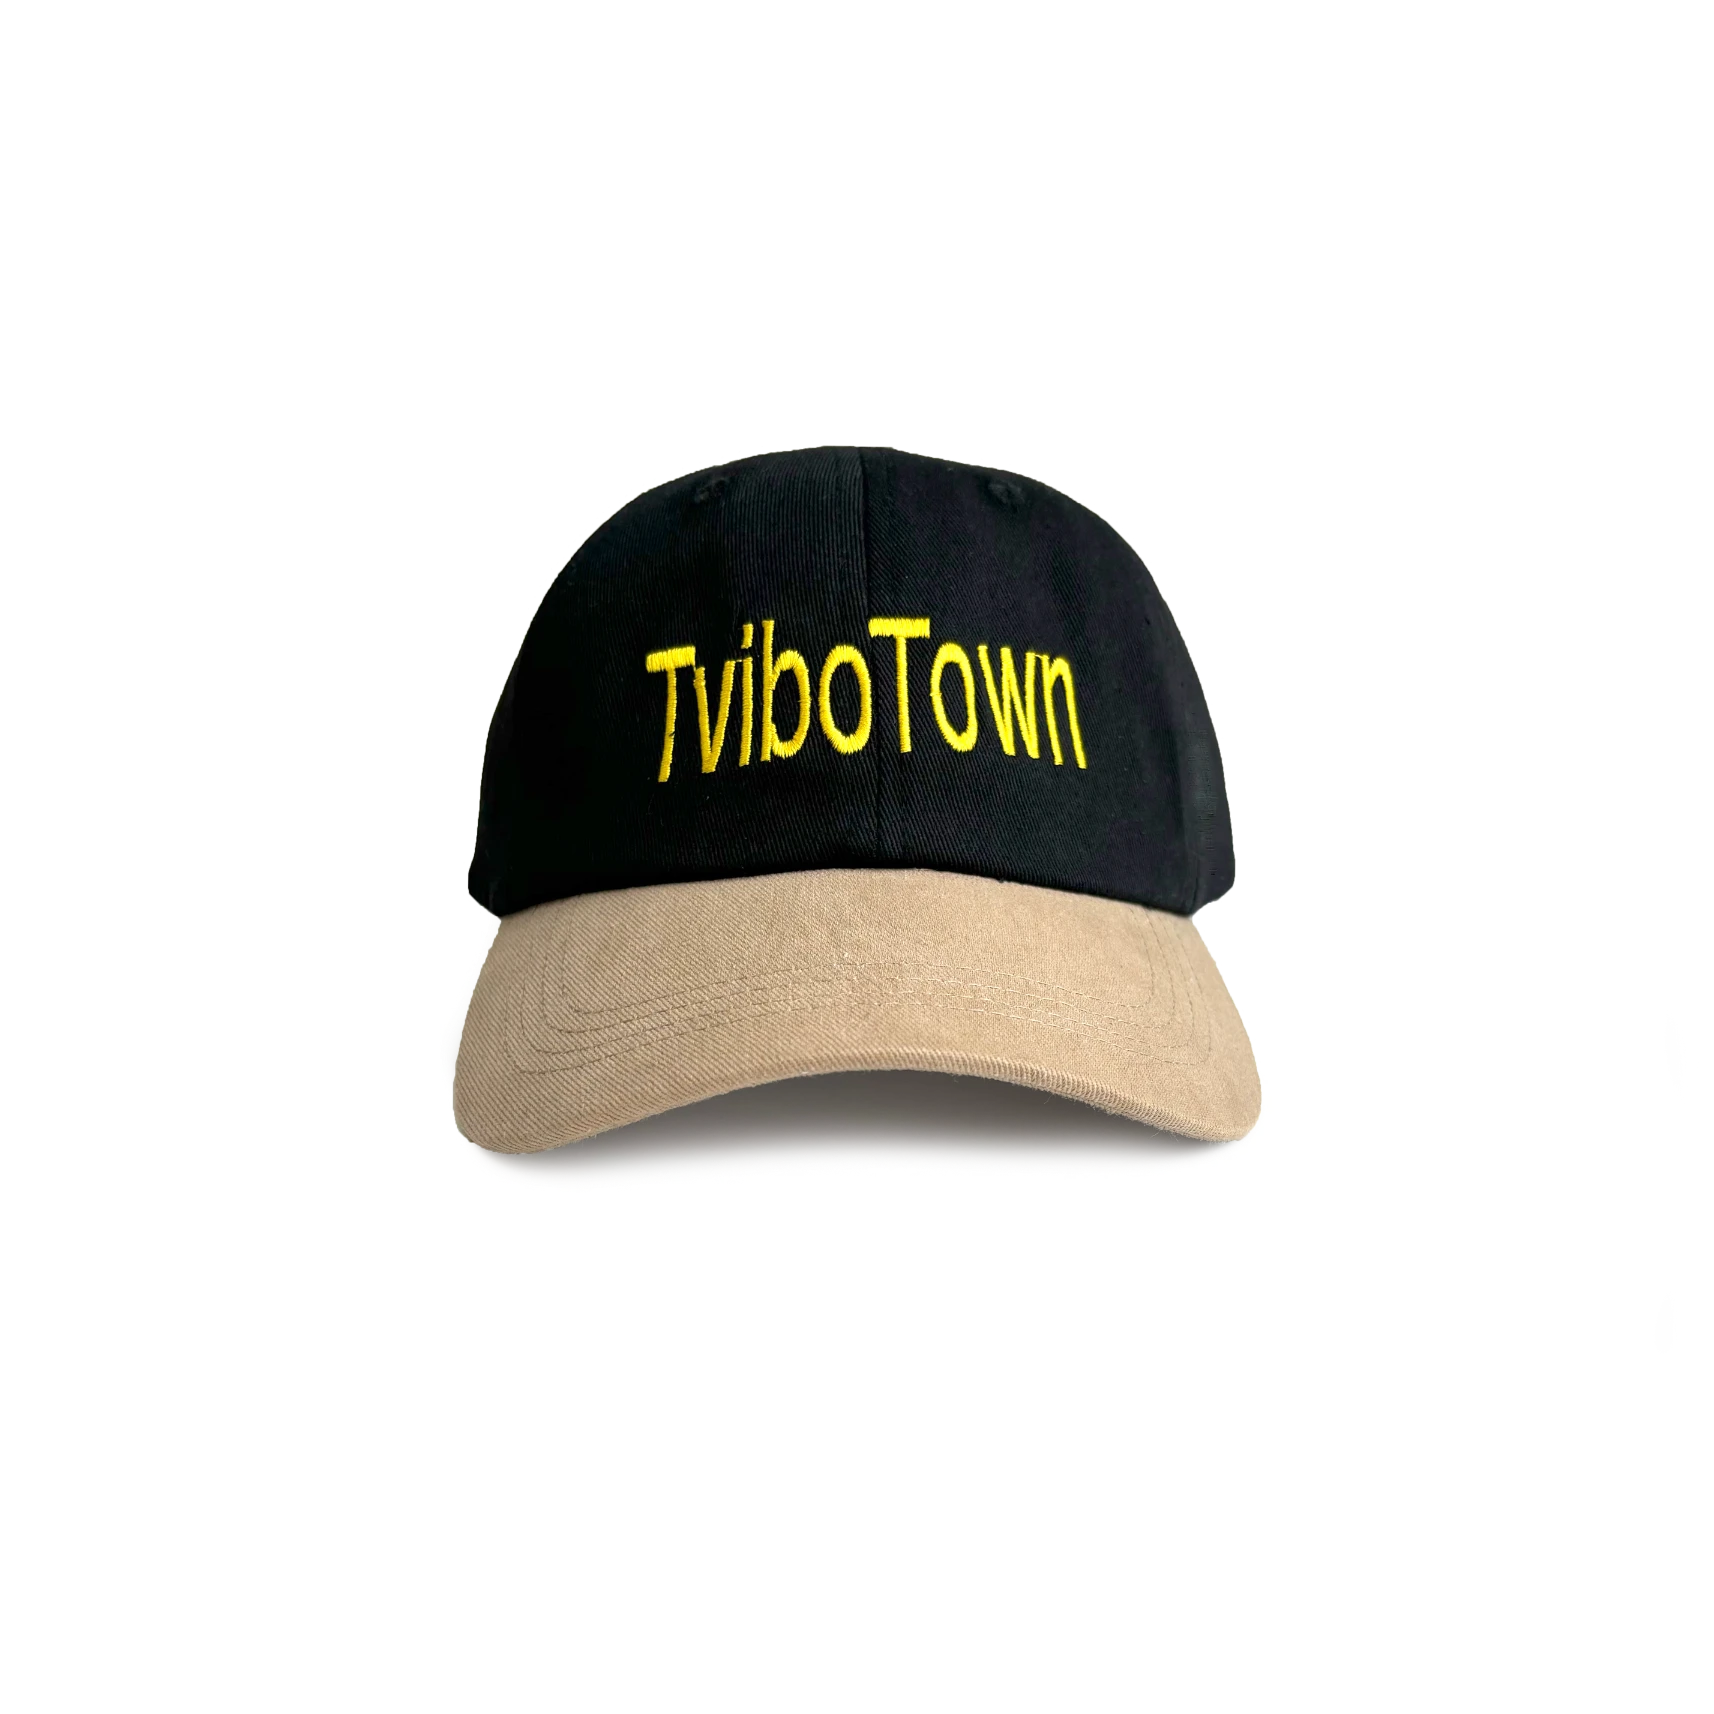 joh-dad_cap_tvibo_town_FRONT